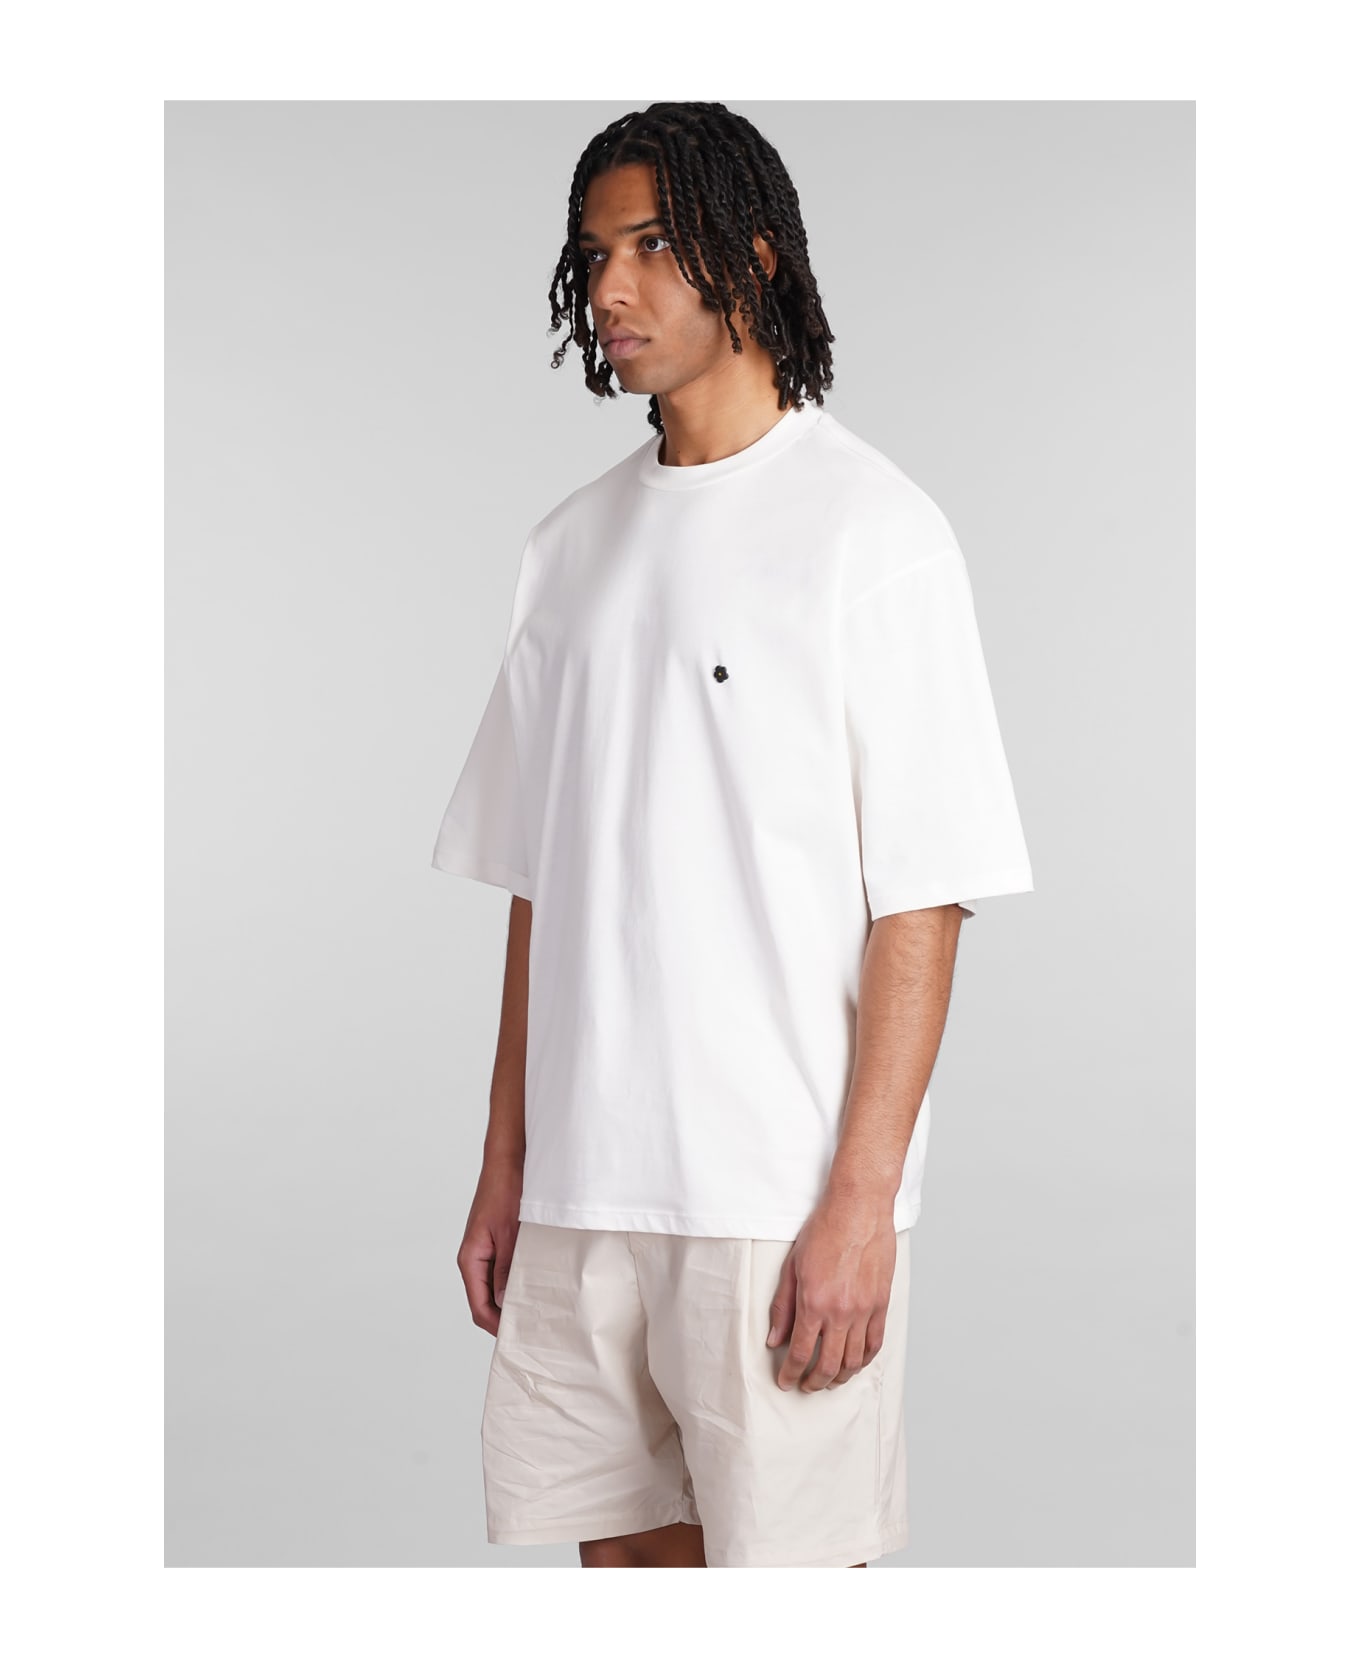 A Paper Kid T-shirt In White Cotton - Crema